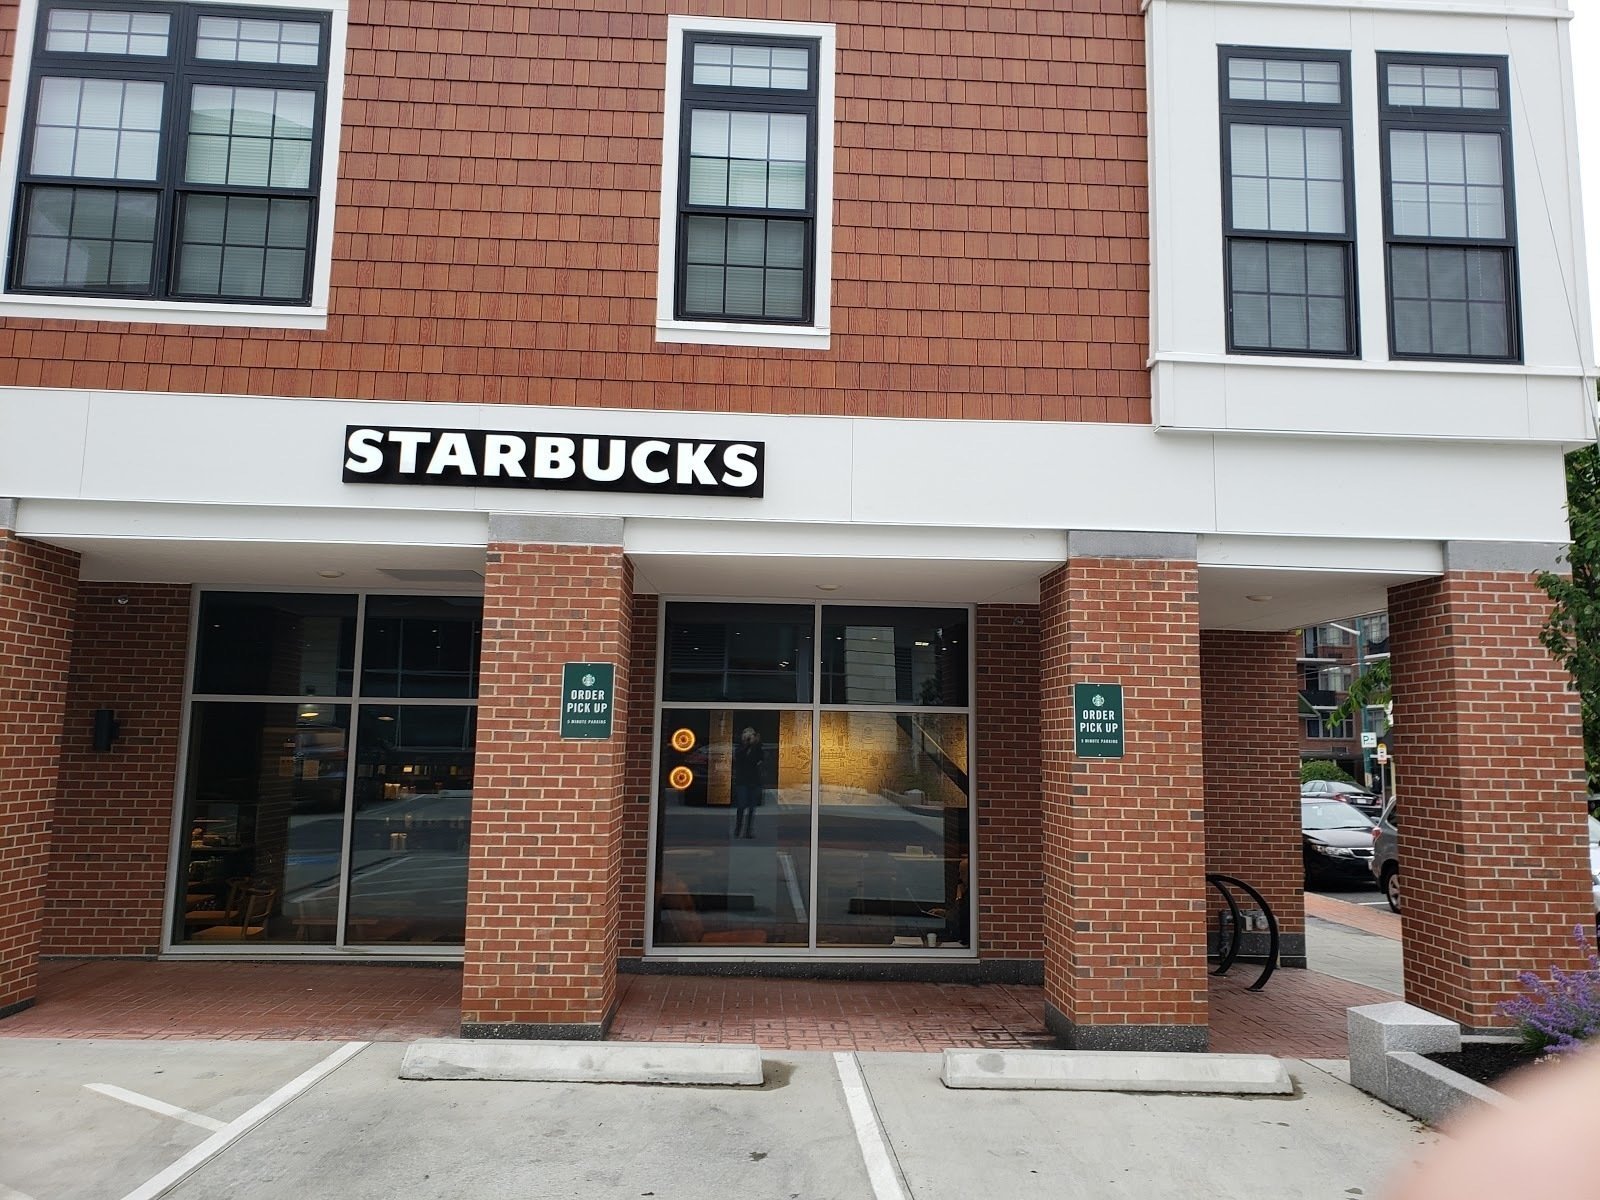 <span class="translation_missing" title="translation missing: en.meta.location_title, location_name: Starbucks @ Trapelo Rd, city: Boston">Location Title</span>